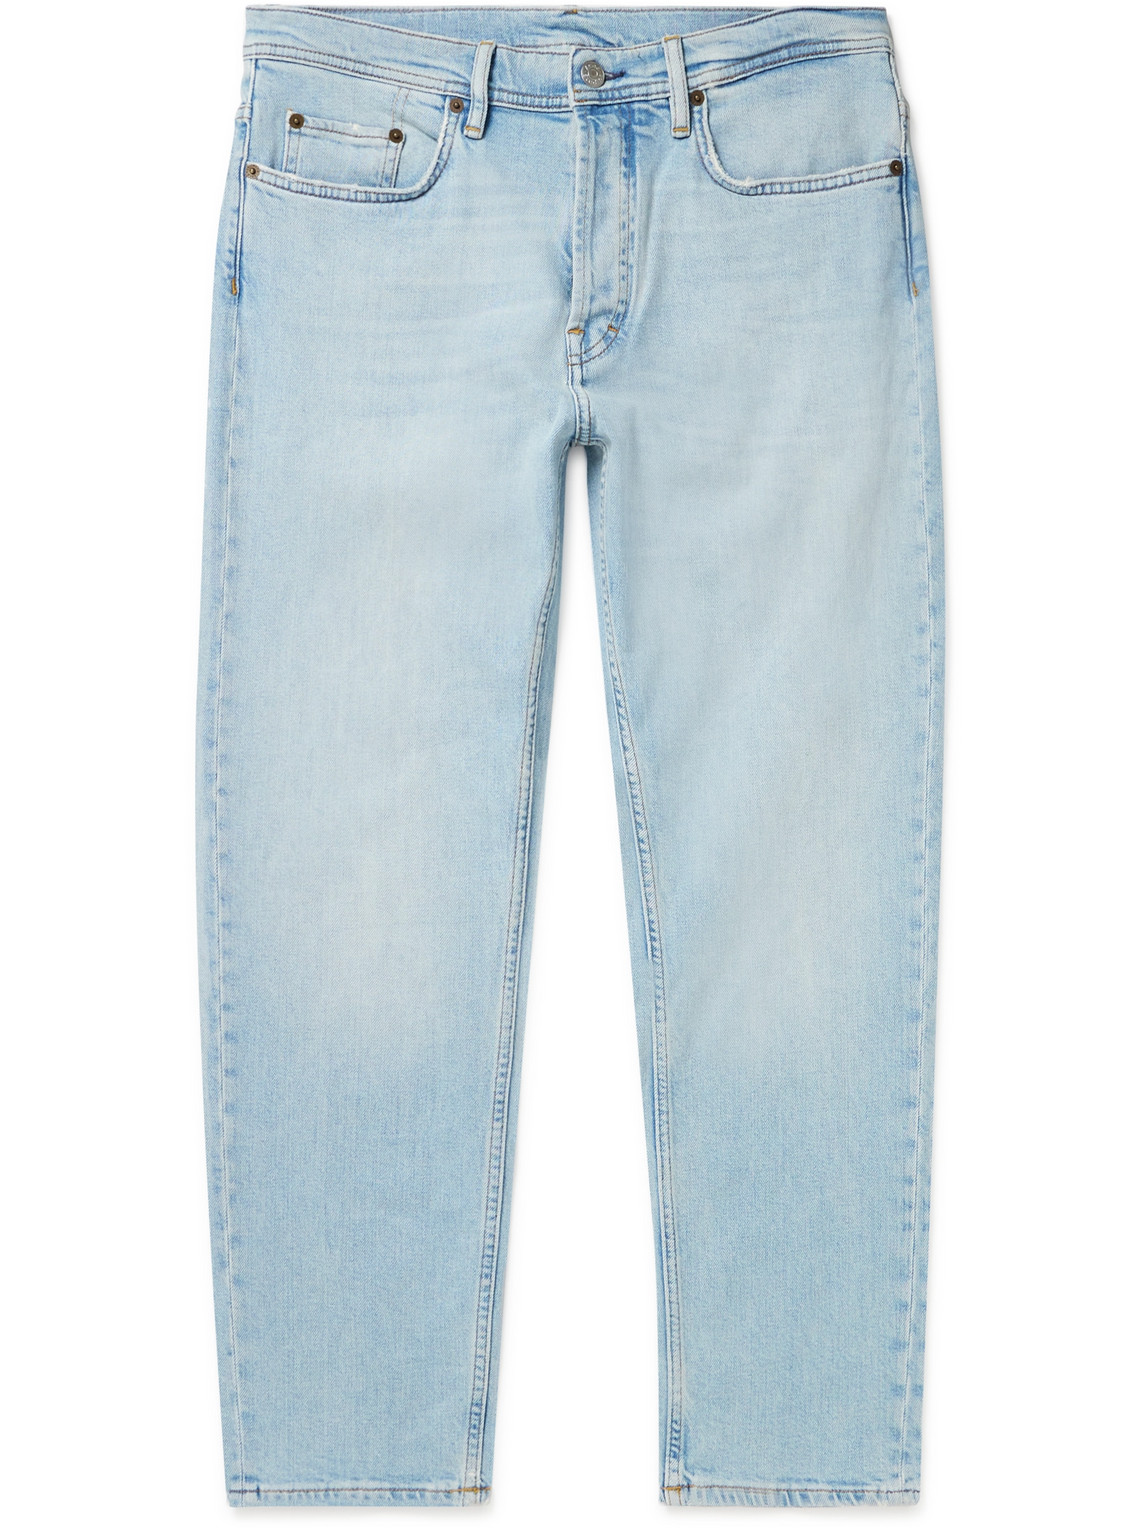 Acne Studios Slim Fit Jeans - River In Light Blue | ModeSens